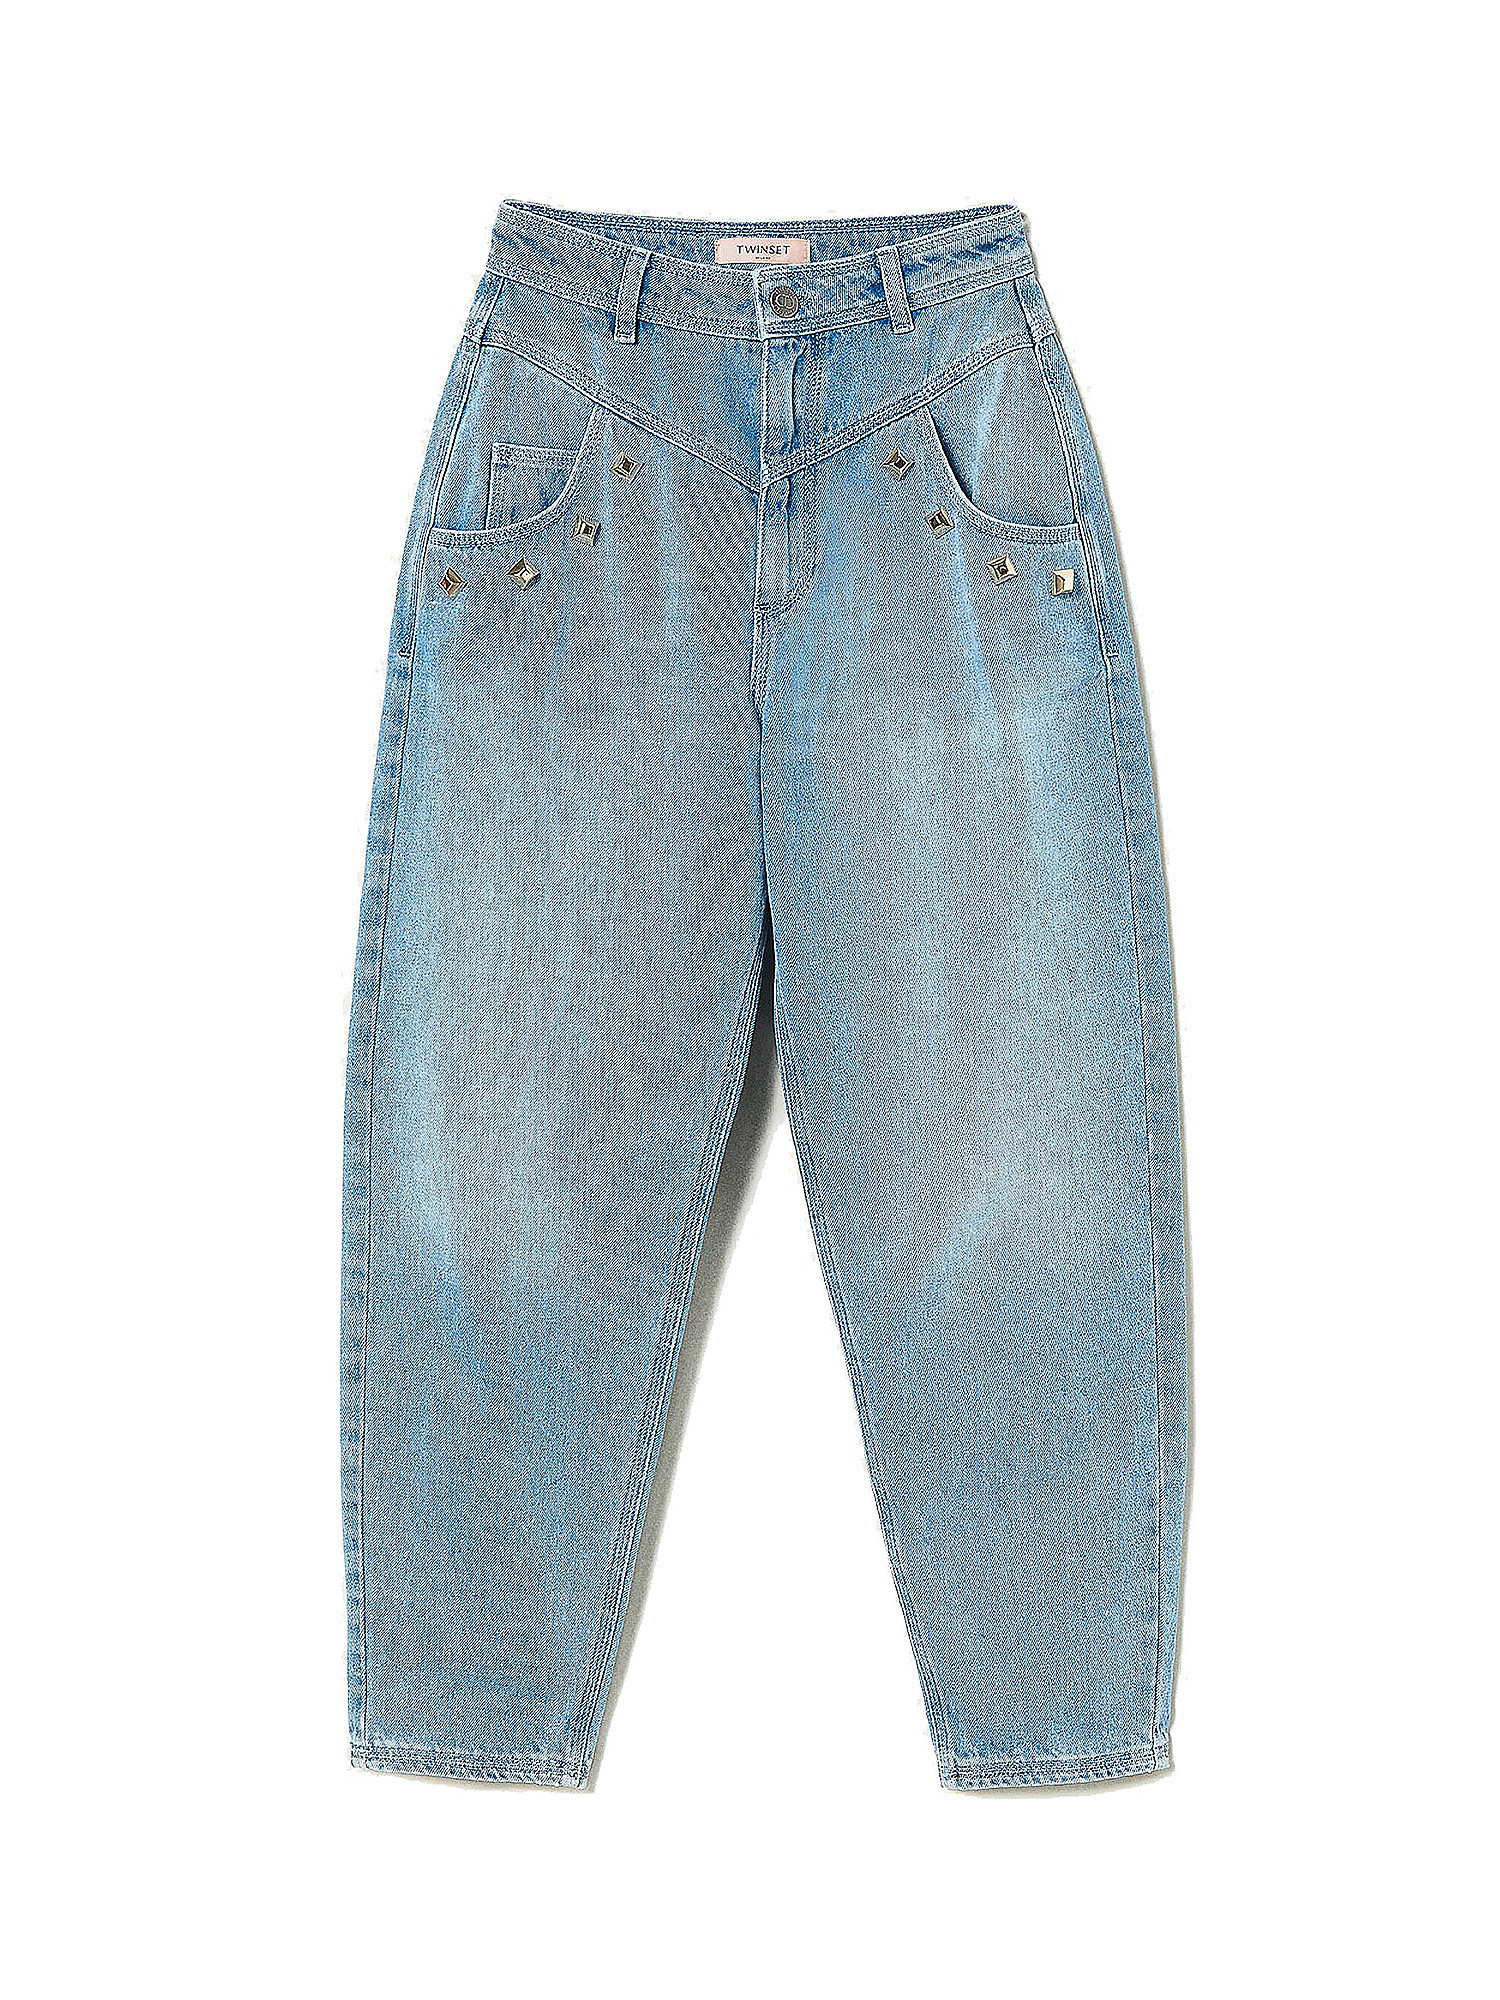 Jeans a vita alta con borchie, Denim, large image number 0